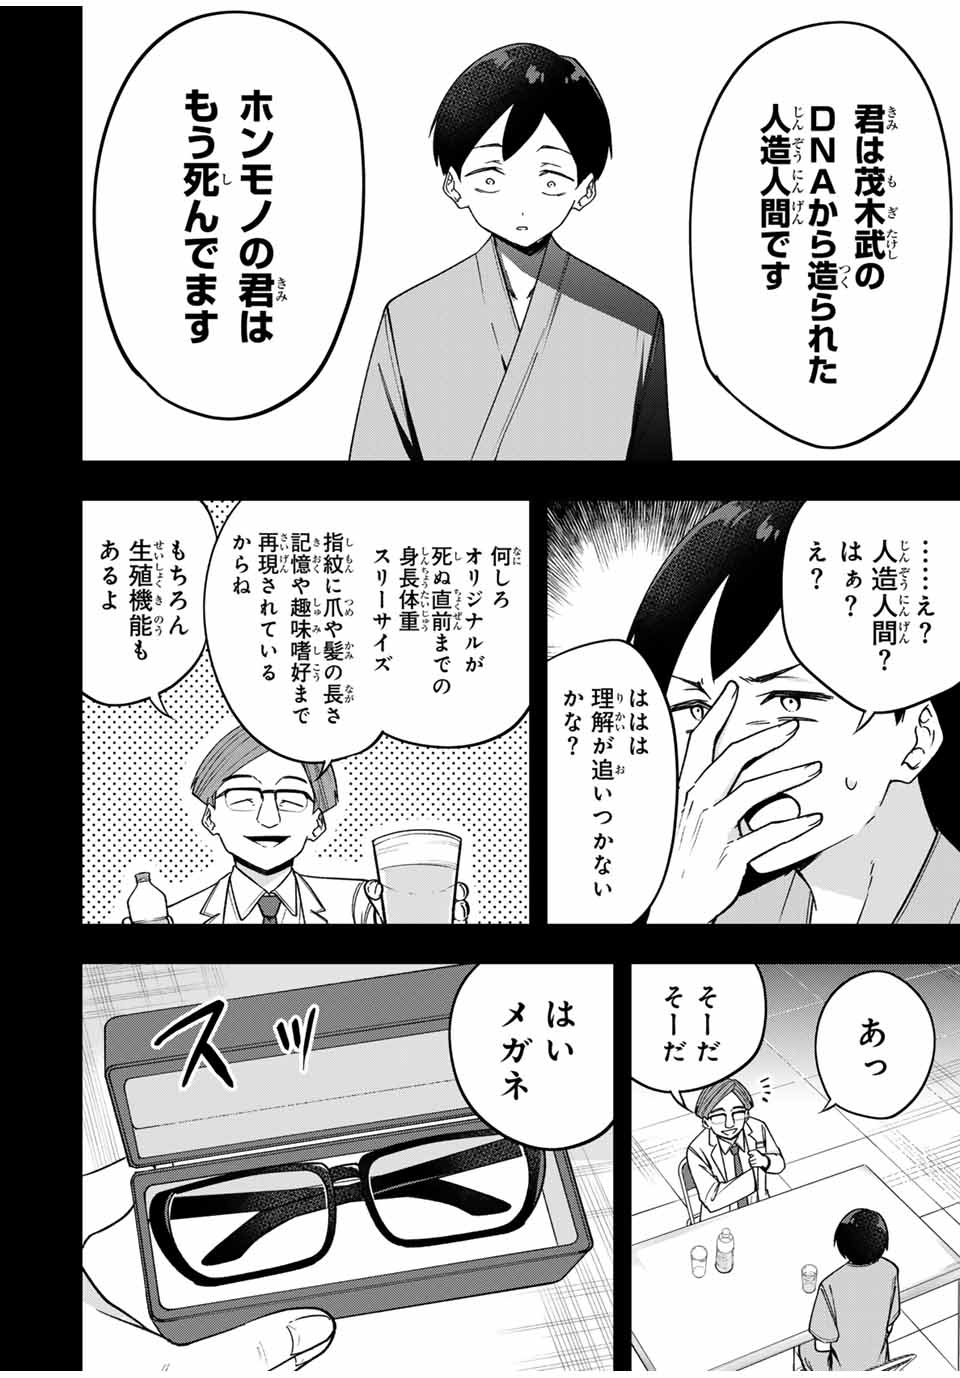 Heroine wa xx Okasegitai - Chapter 9 - Page 12